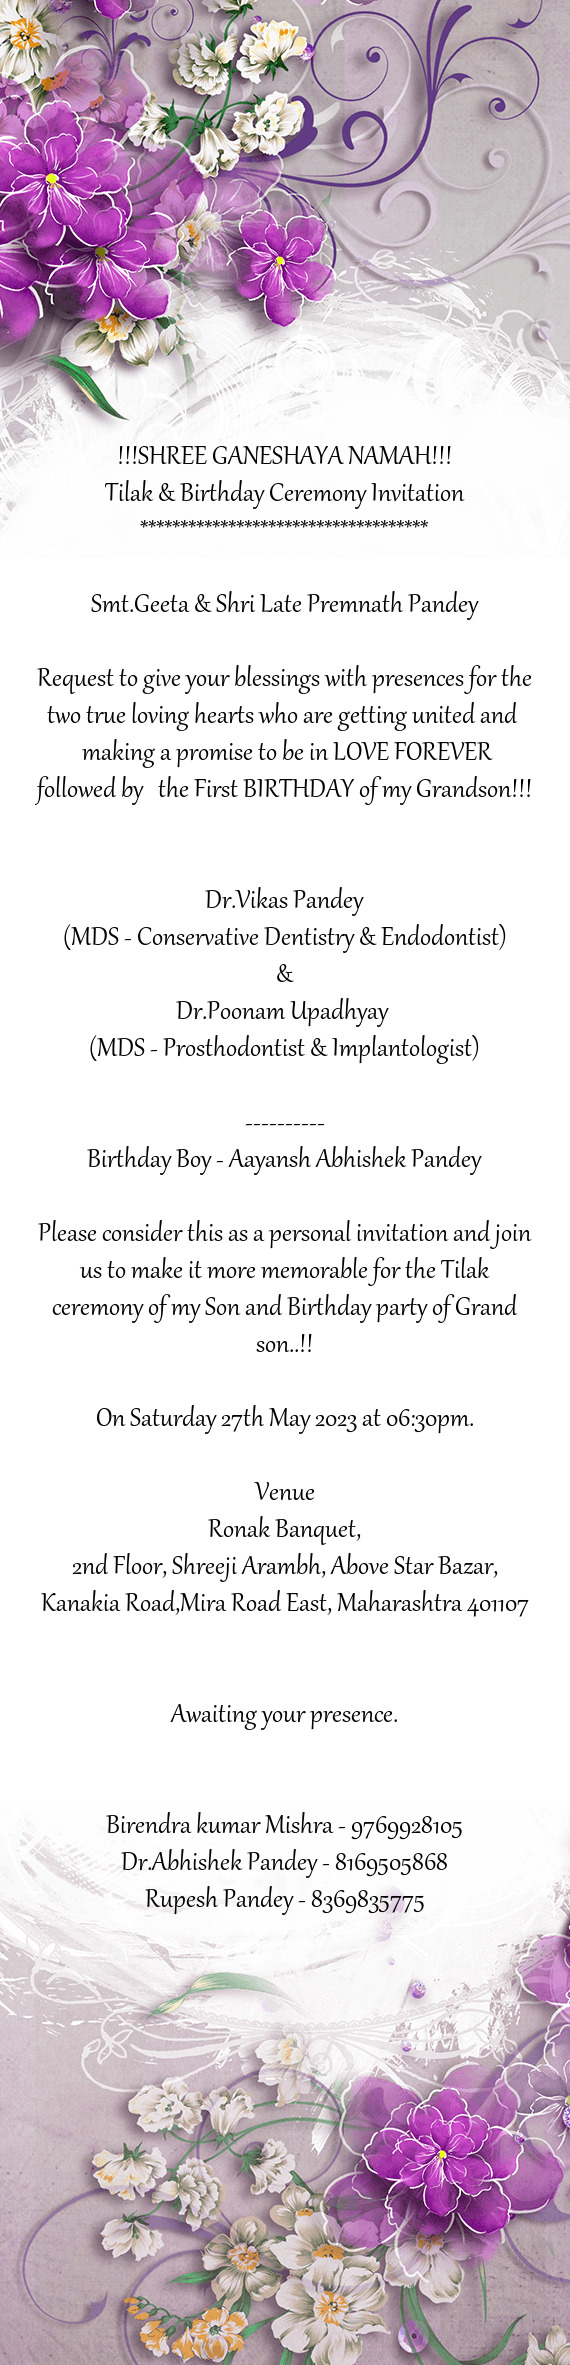 Tilak & Birthday Ceremony Invitation